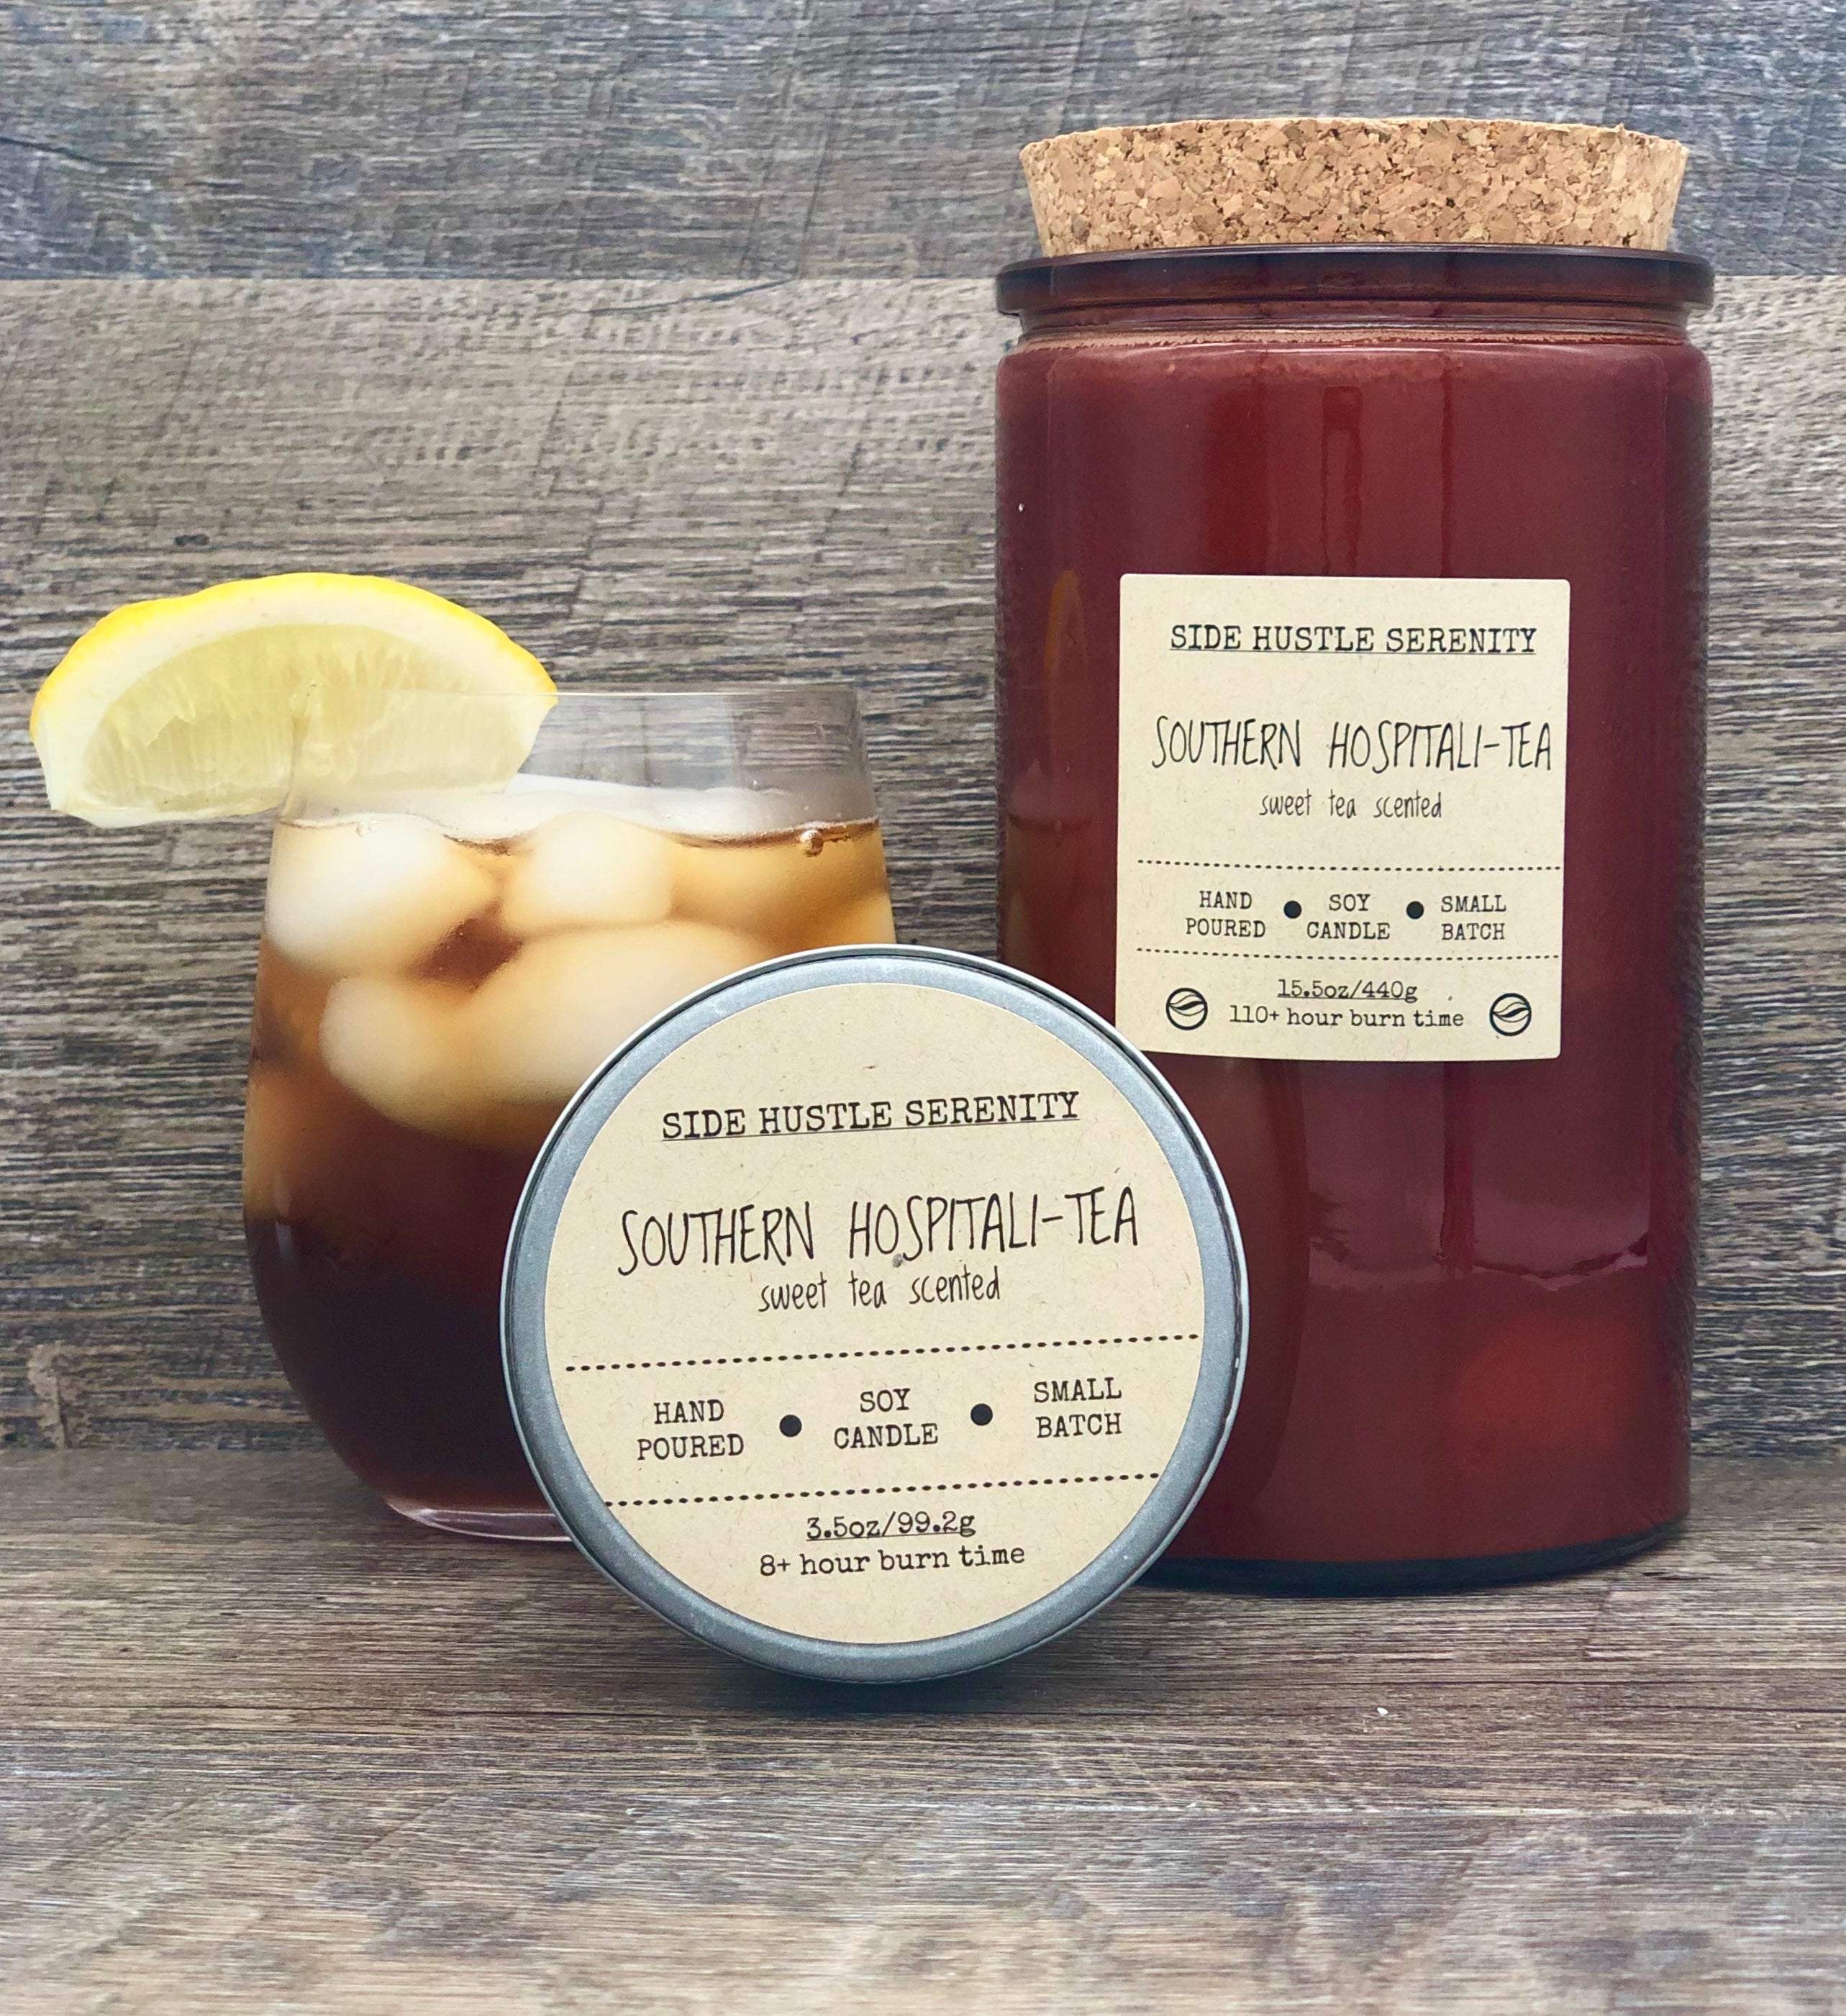 Southern Hospitali-TEA "Sweet Tea" Scented Soy Candle - Side Hustle Serenity